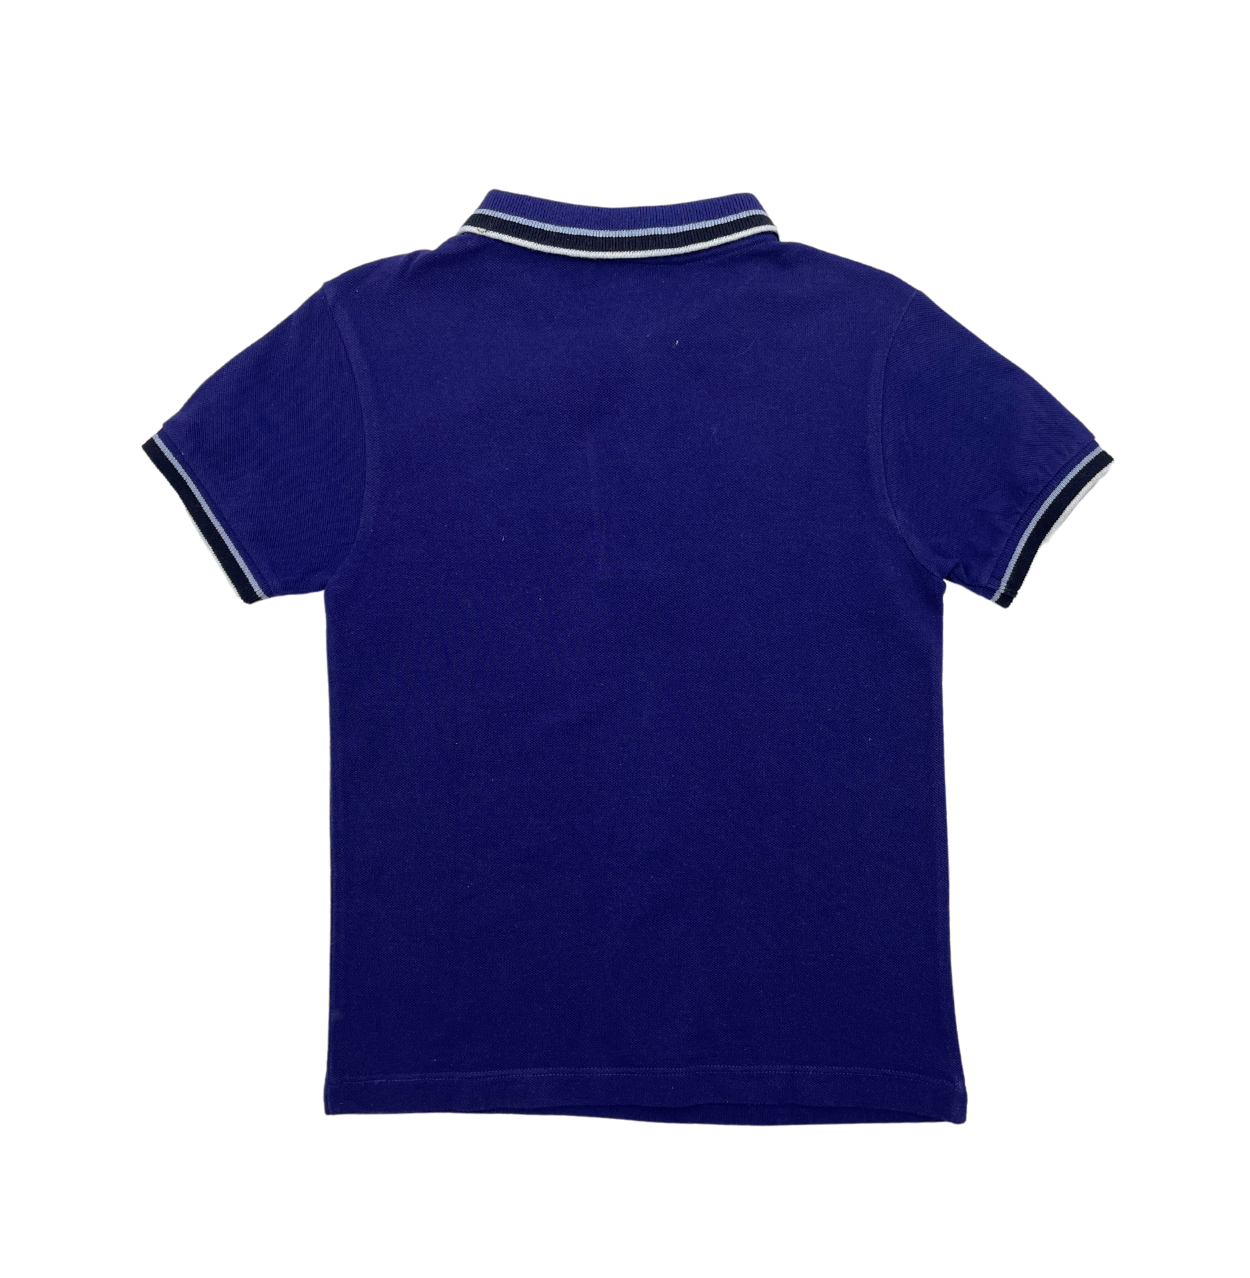 JACADI - Eiffel Tower navy polo shirt - 6 years old